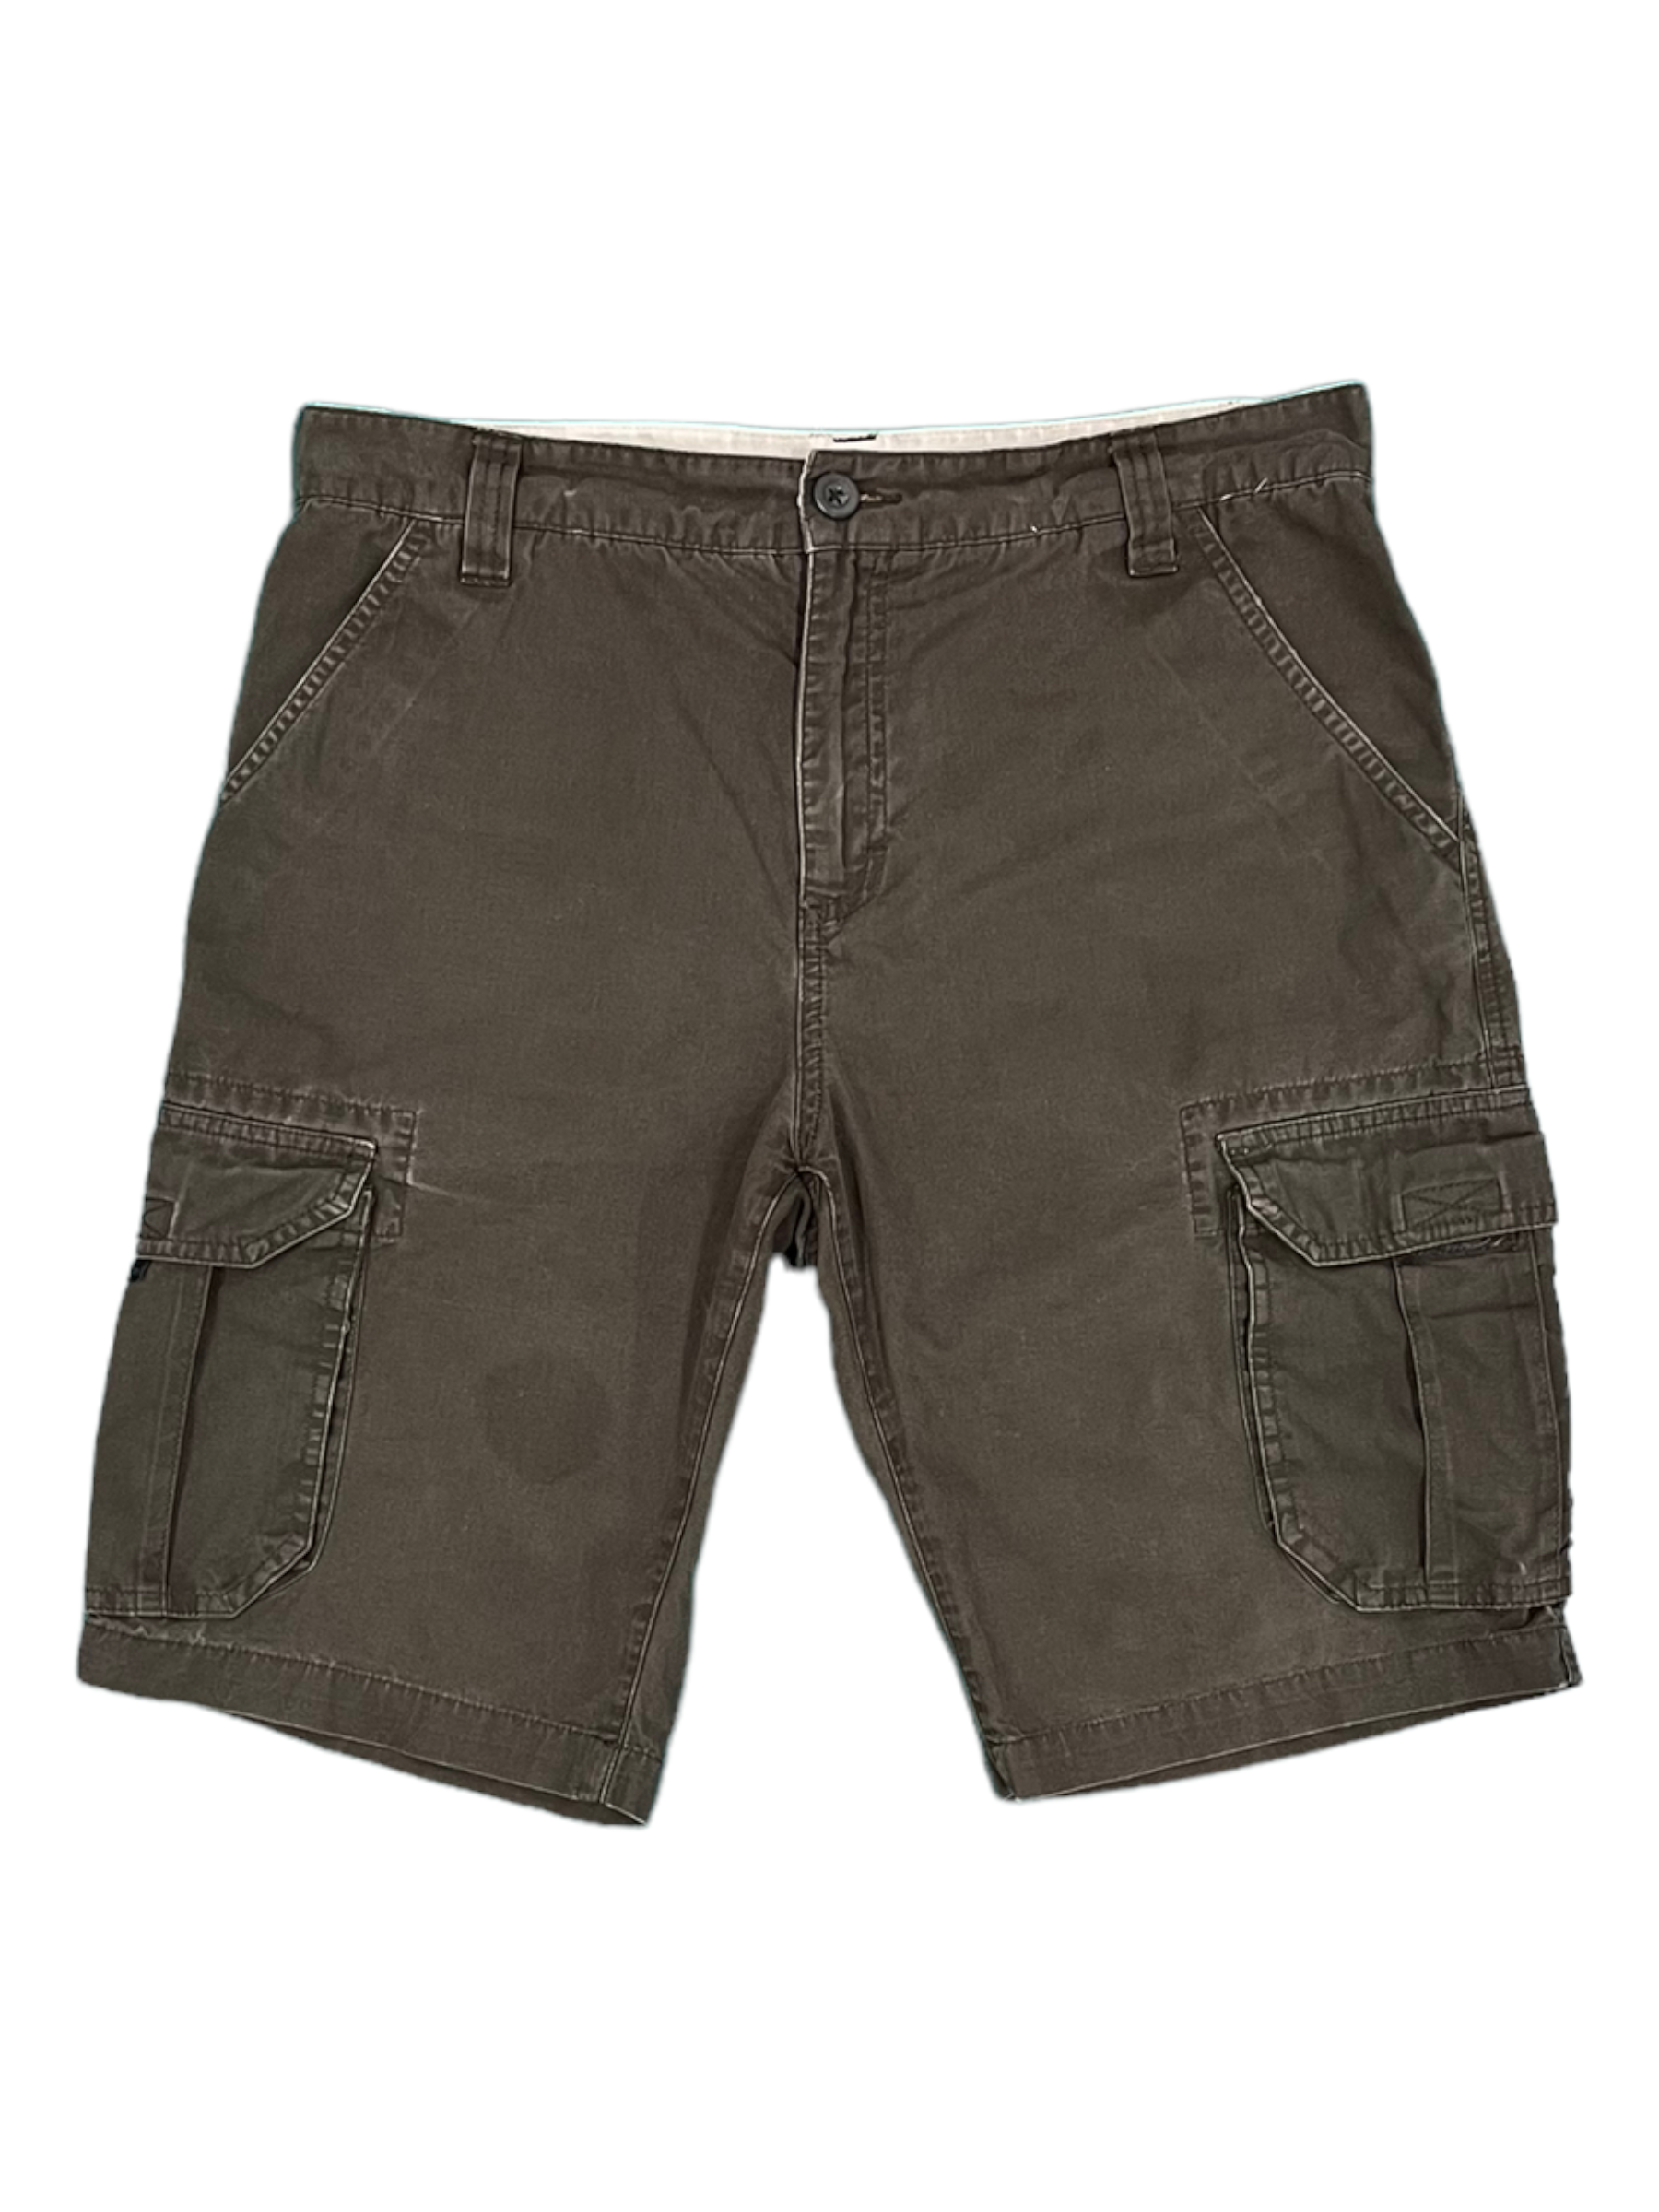 Mens Cargo Shorts - Waist 32"